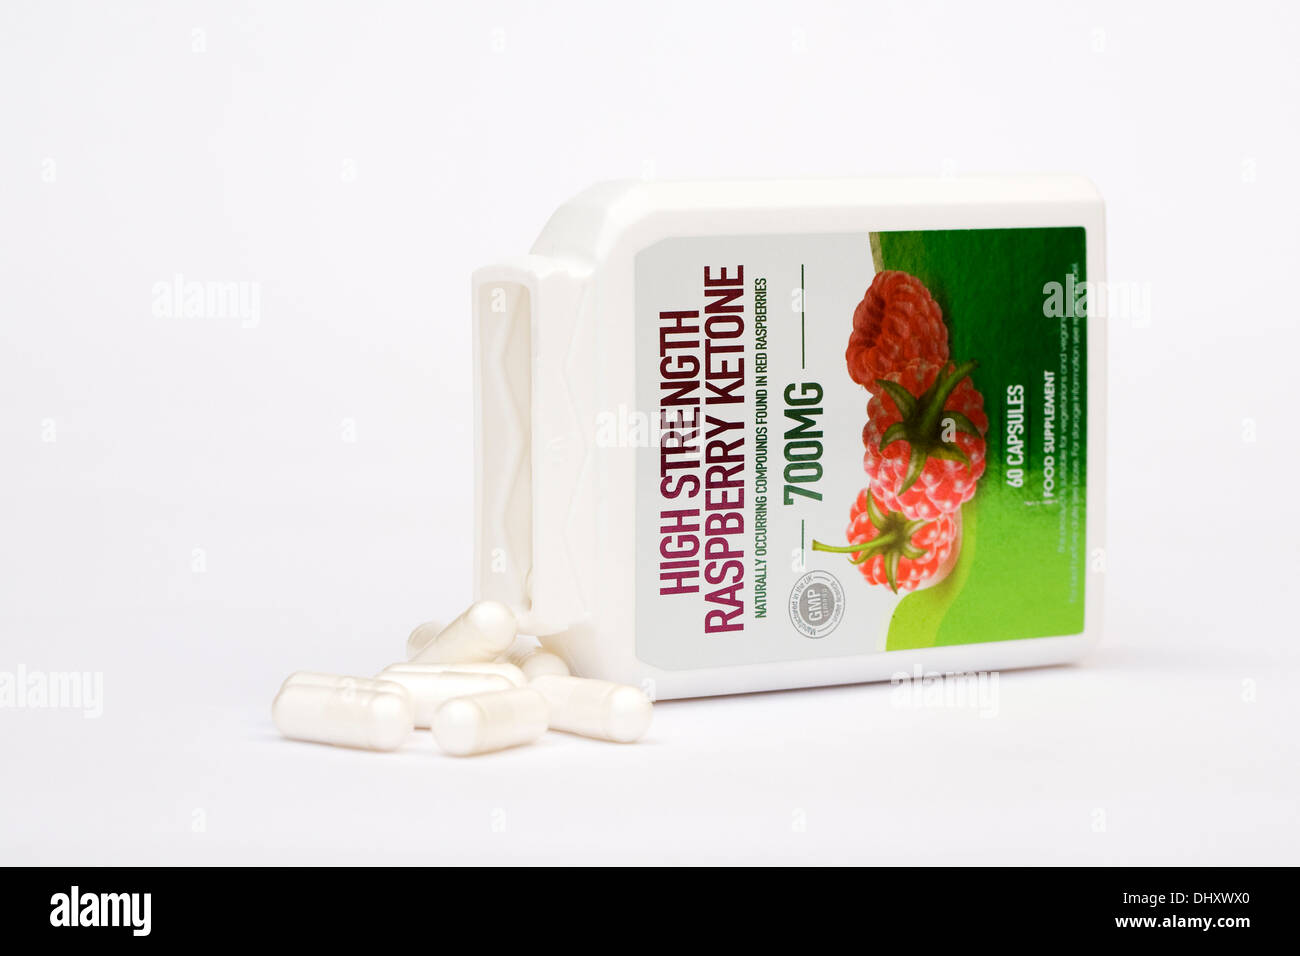 Raspberry Ketone food supplements. Stock Photo